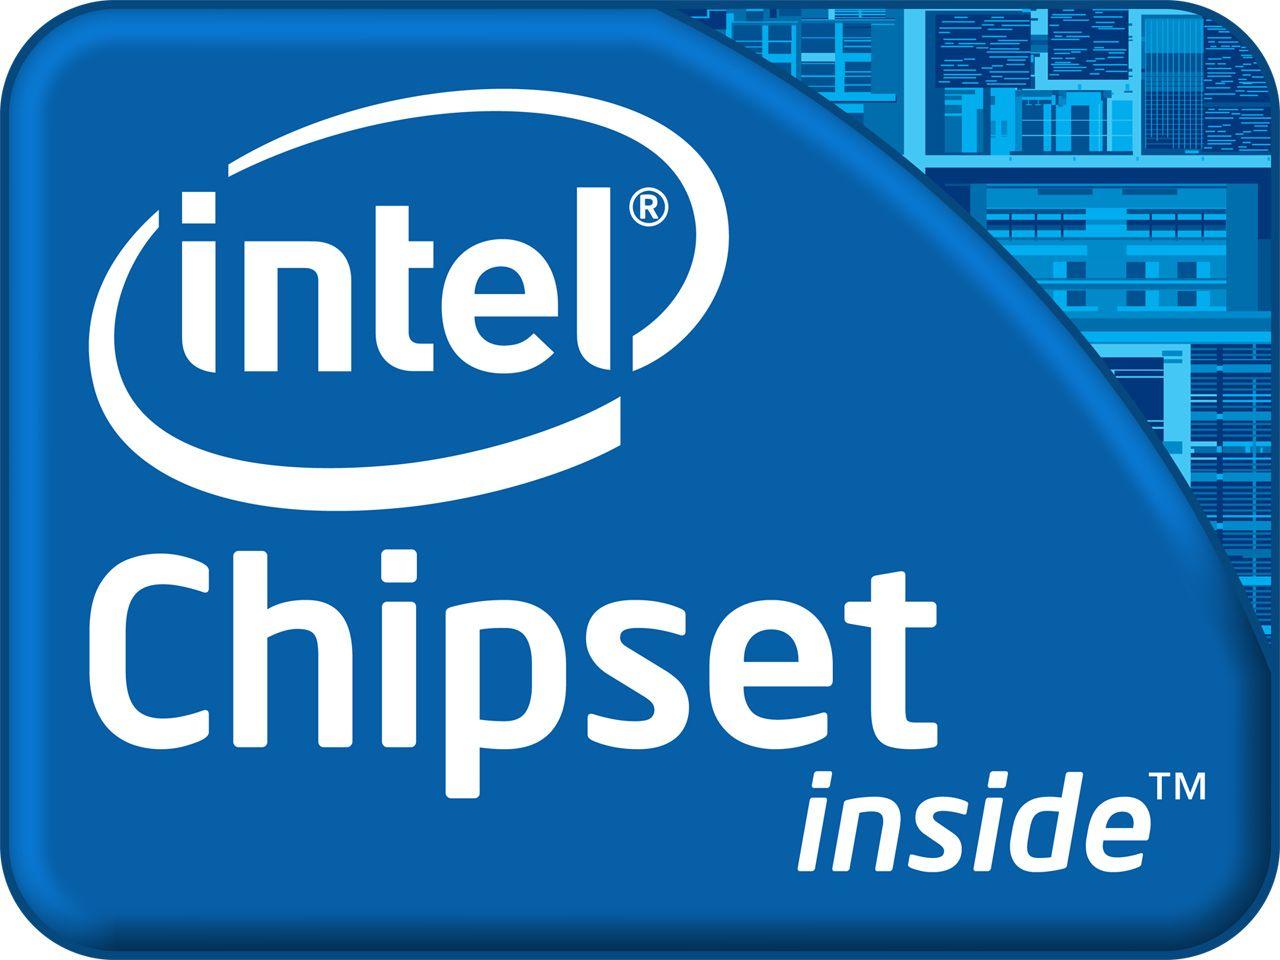 Chipset Intel Logo - Image - 02393950-photo-logo-intel-chipset-inside.jpg | Logo Timeline ...